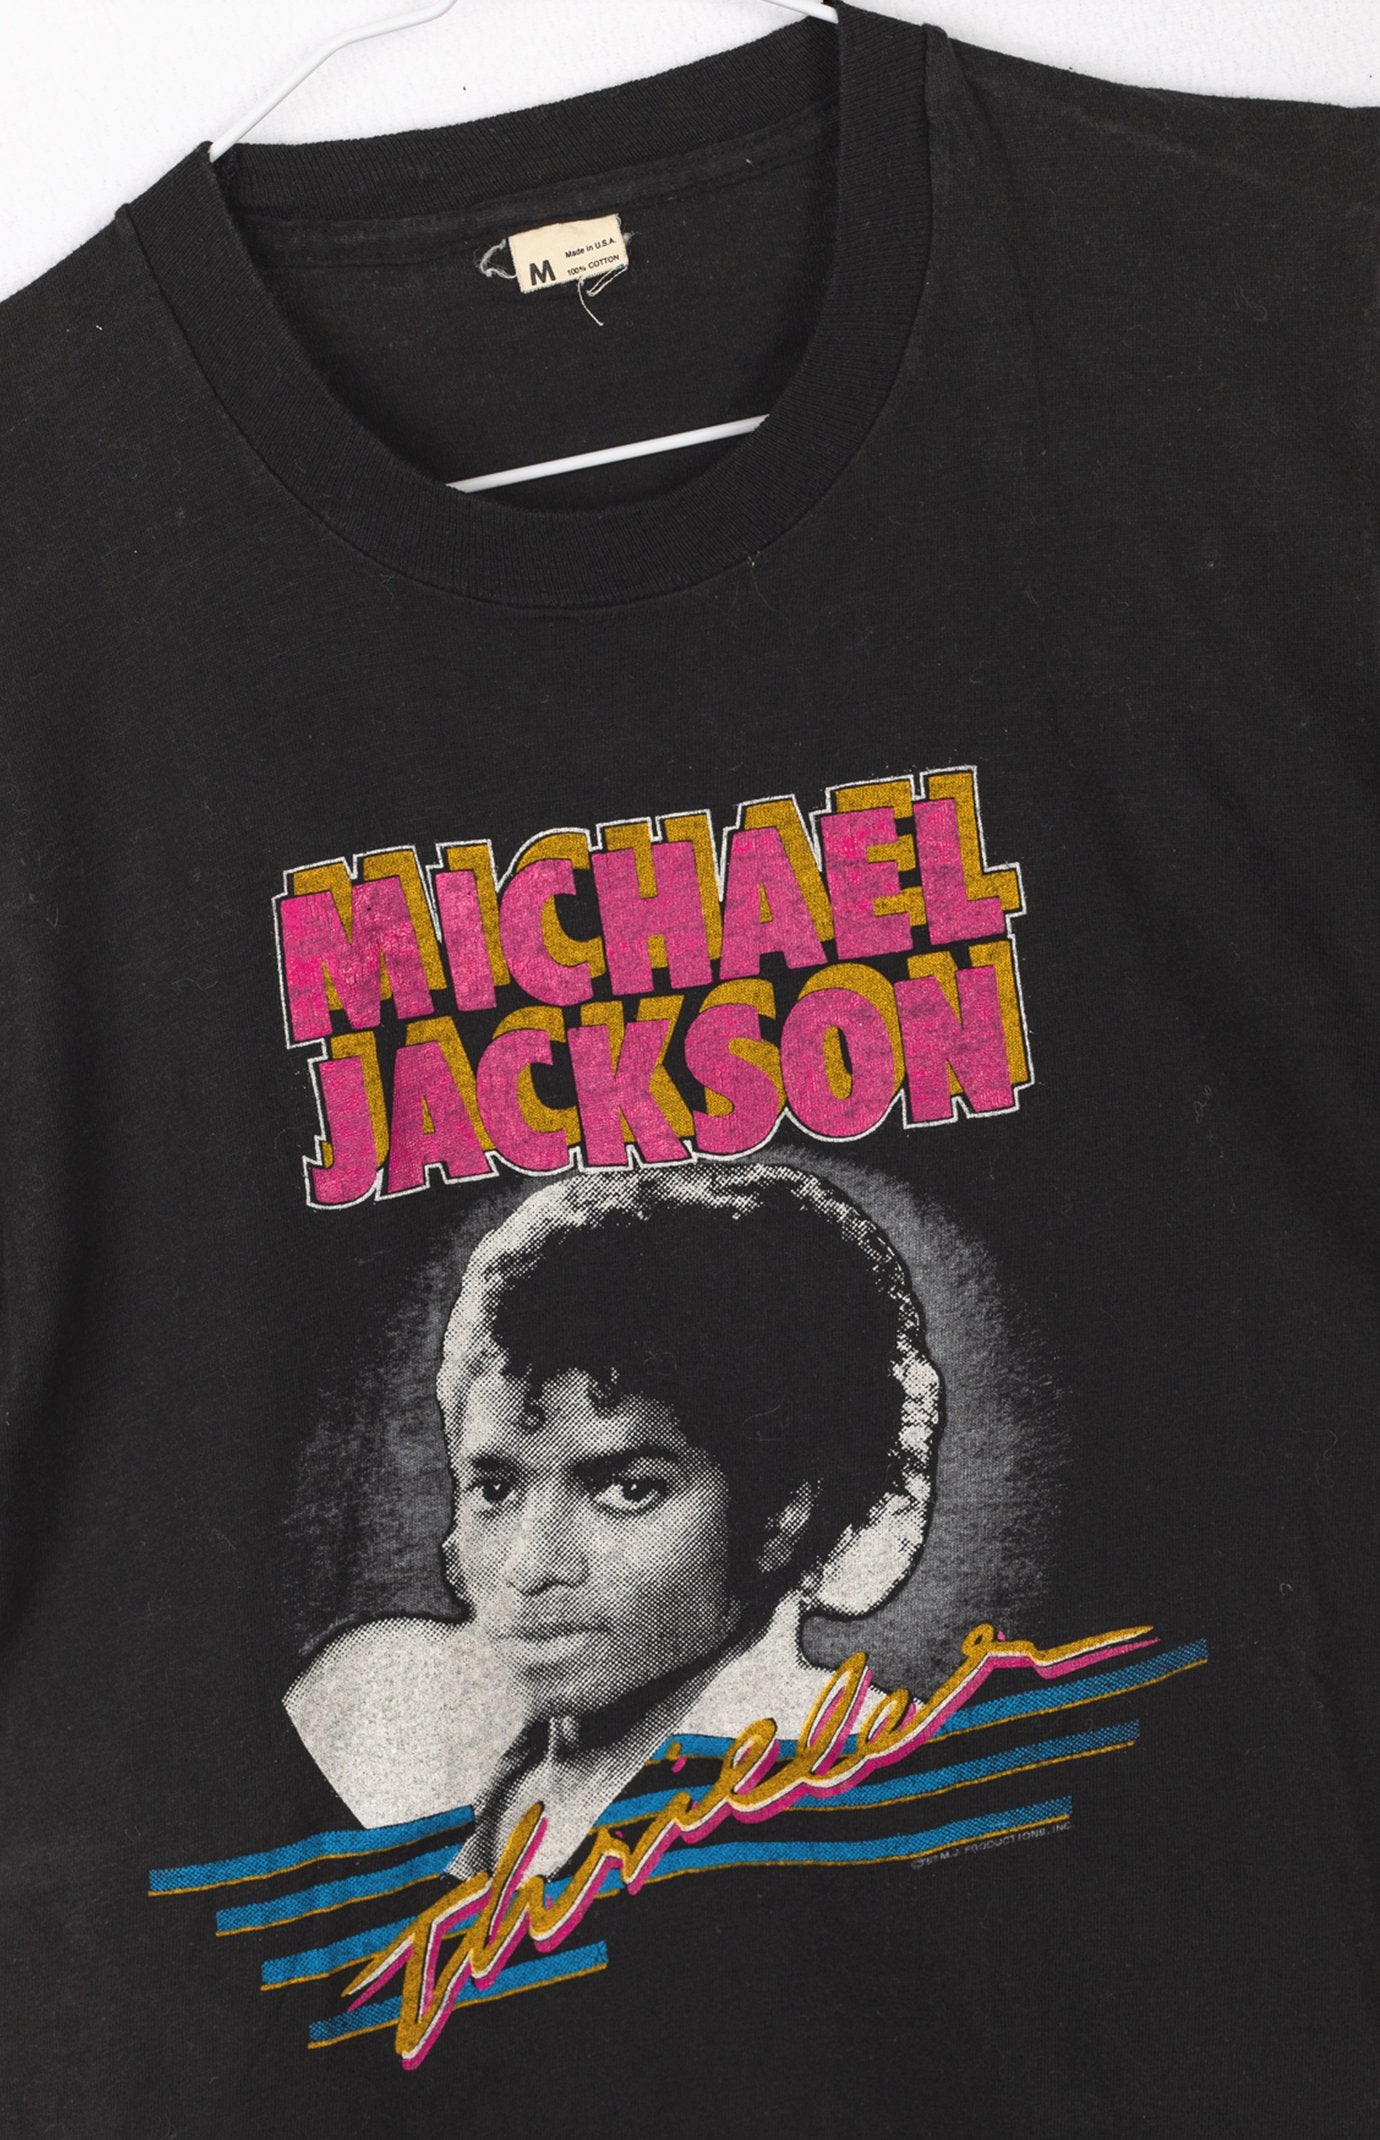 Michael Jackson tee